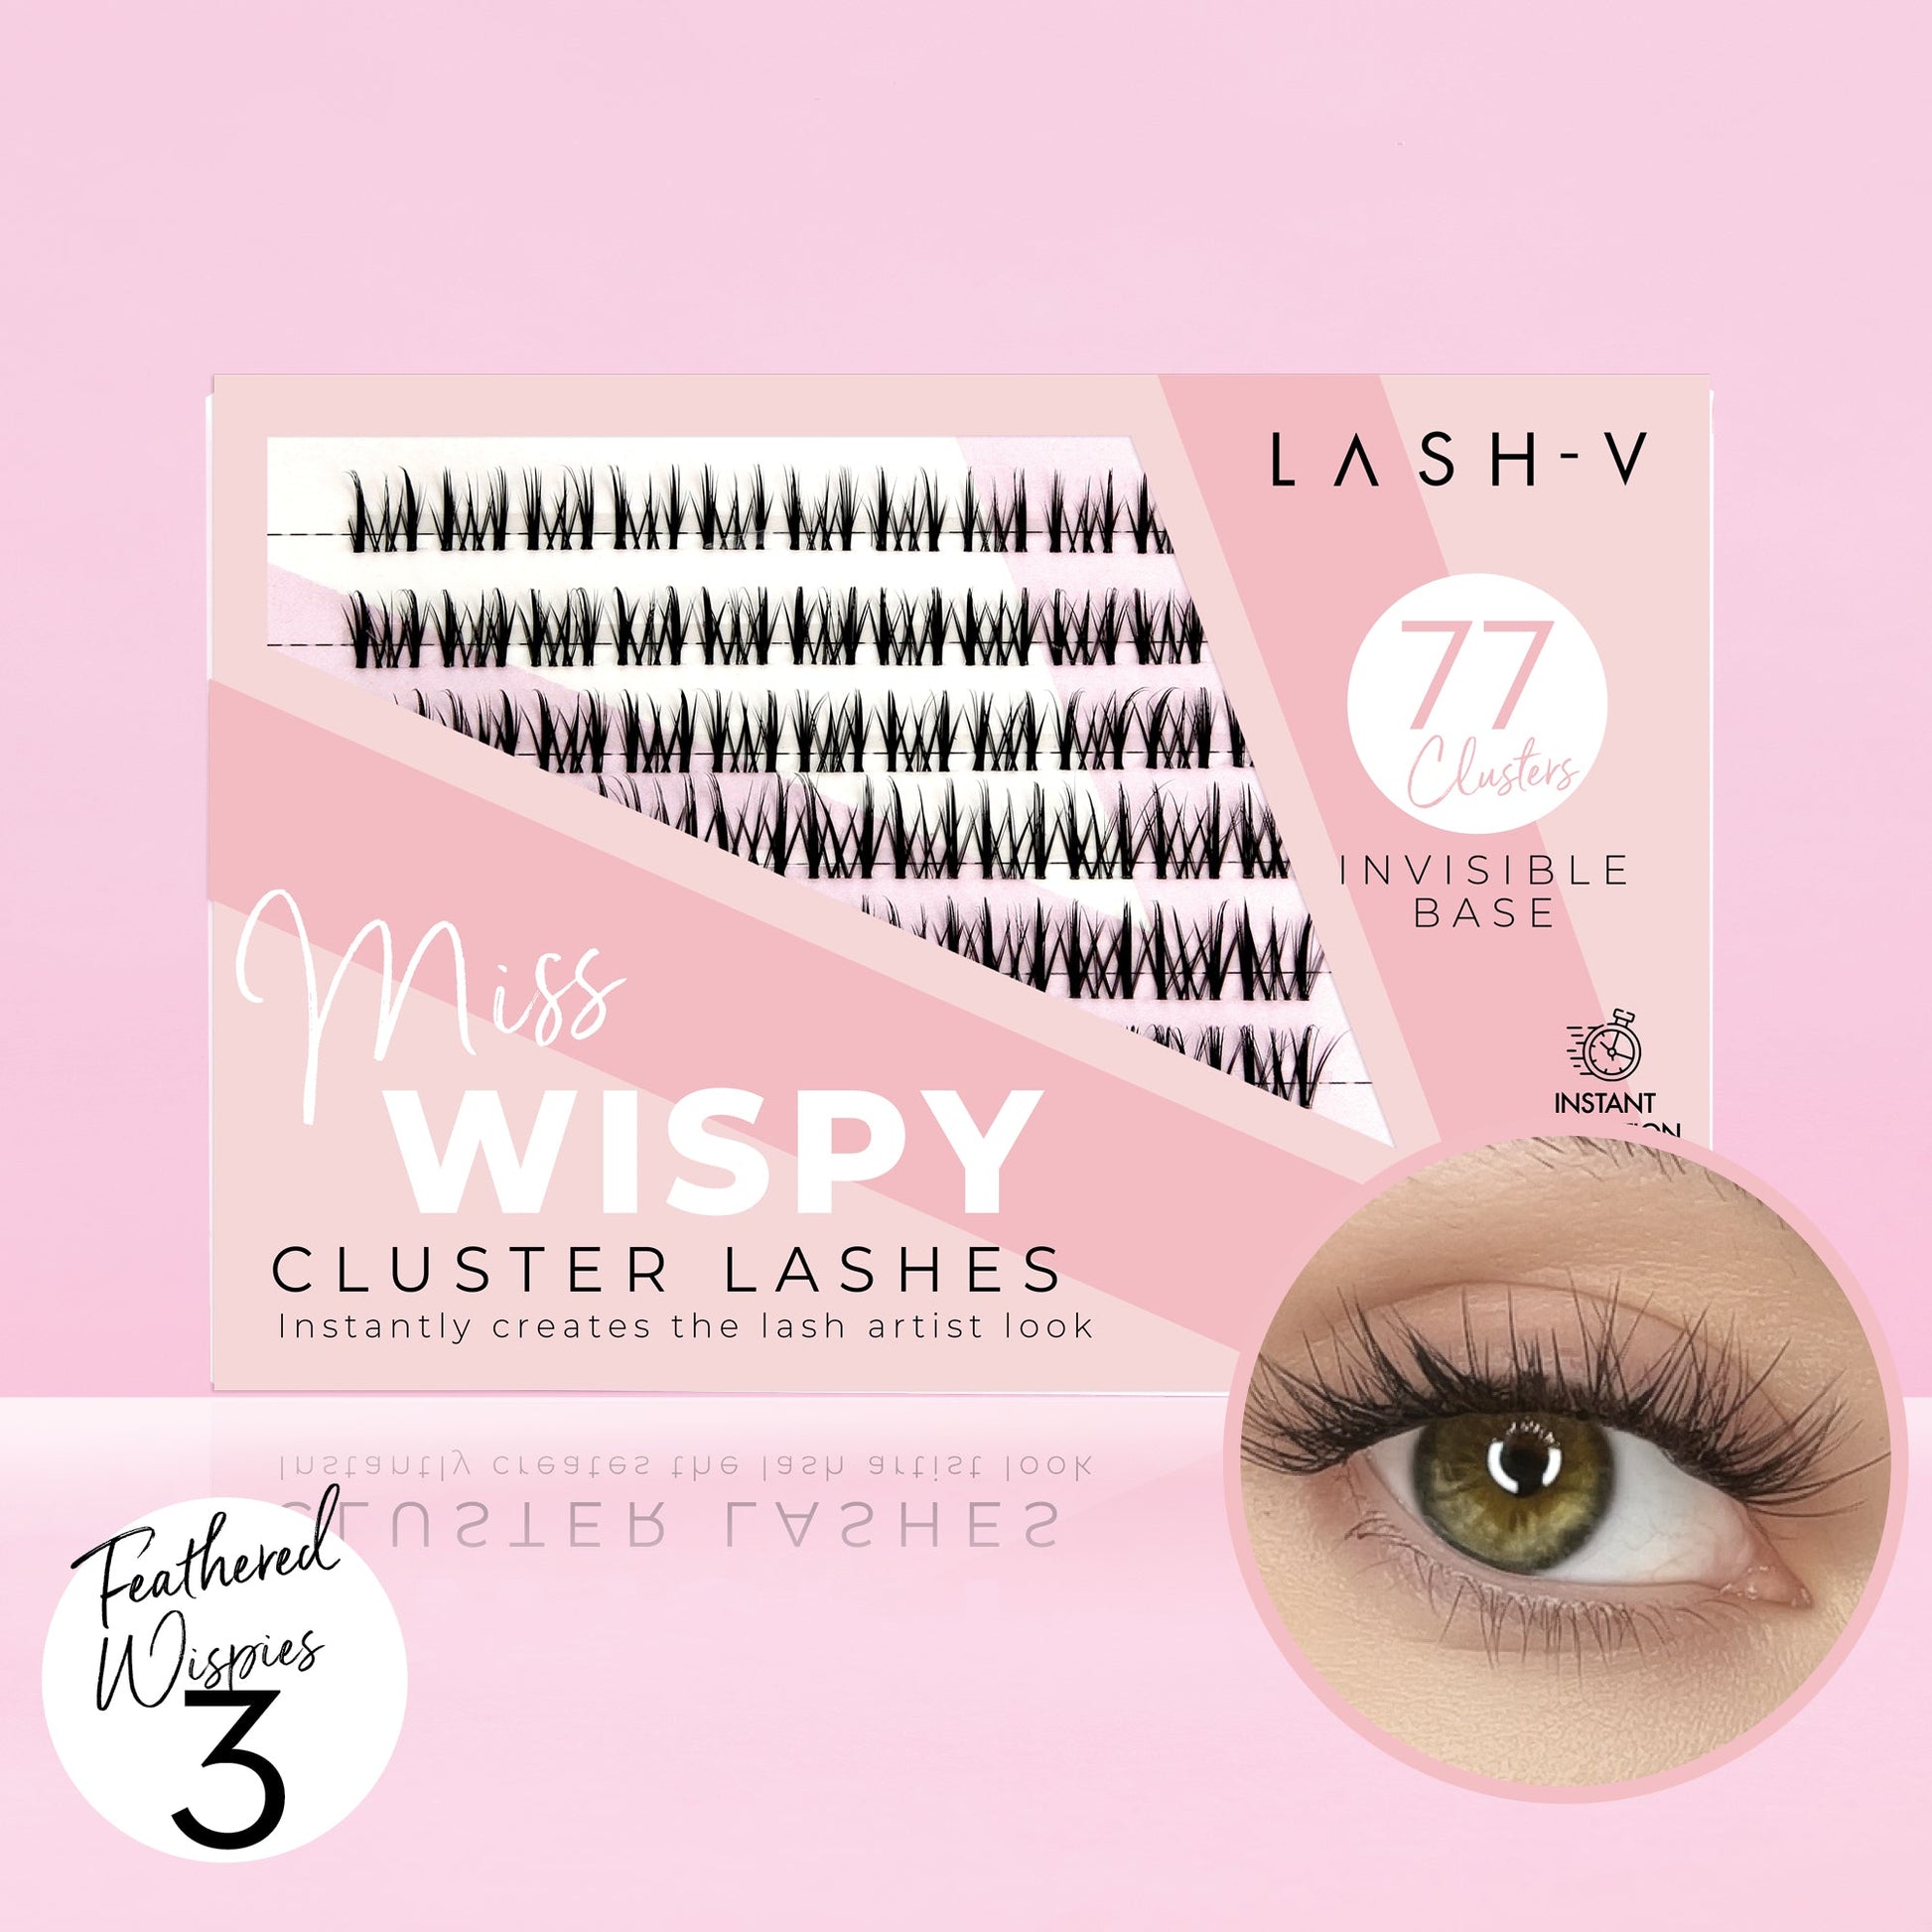 Miss Wispy Cluster Lashes - 77 Clusters False Eyelashes OneVSalon 3-Feathered Wispies  